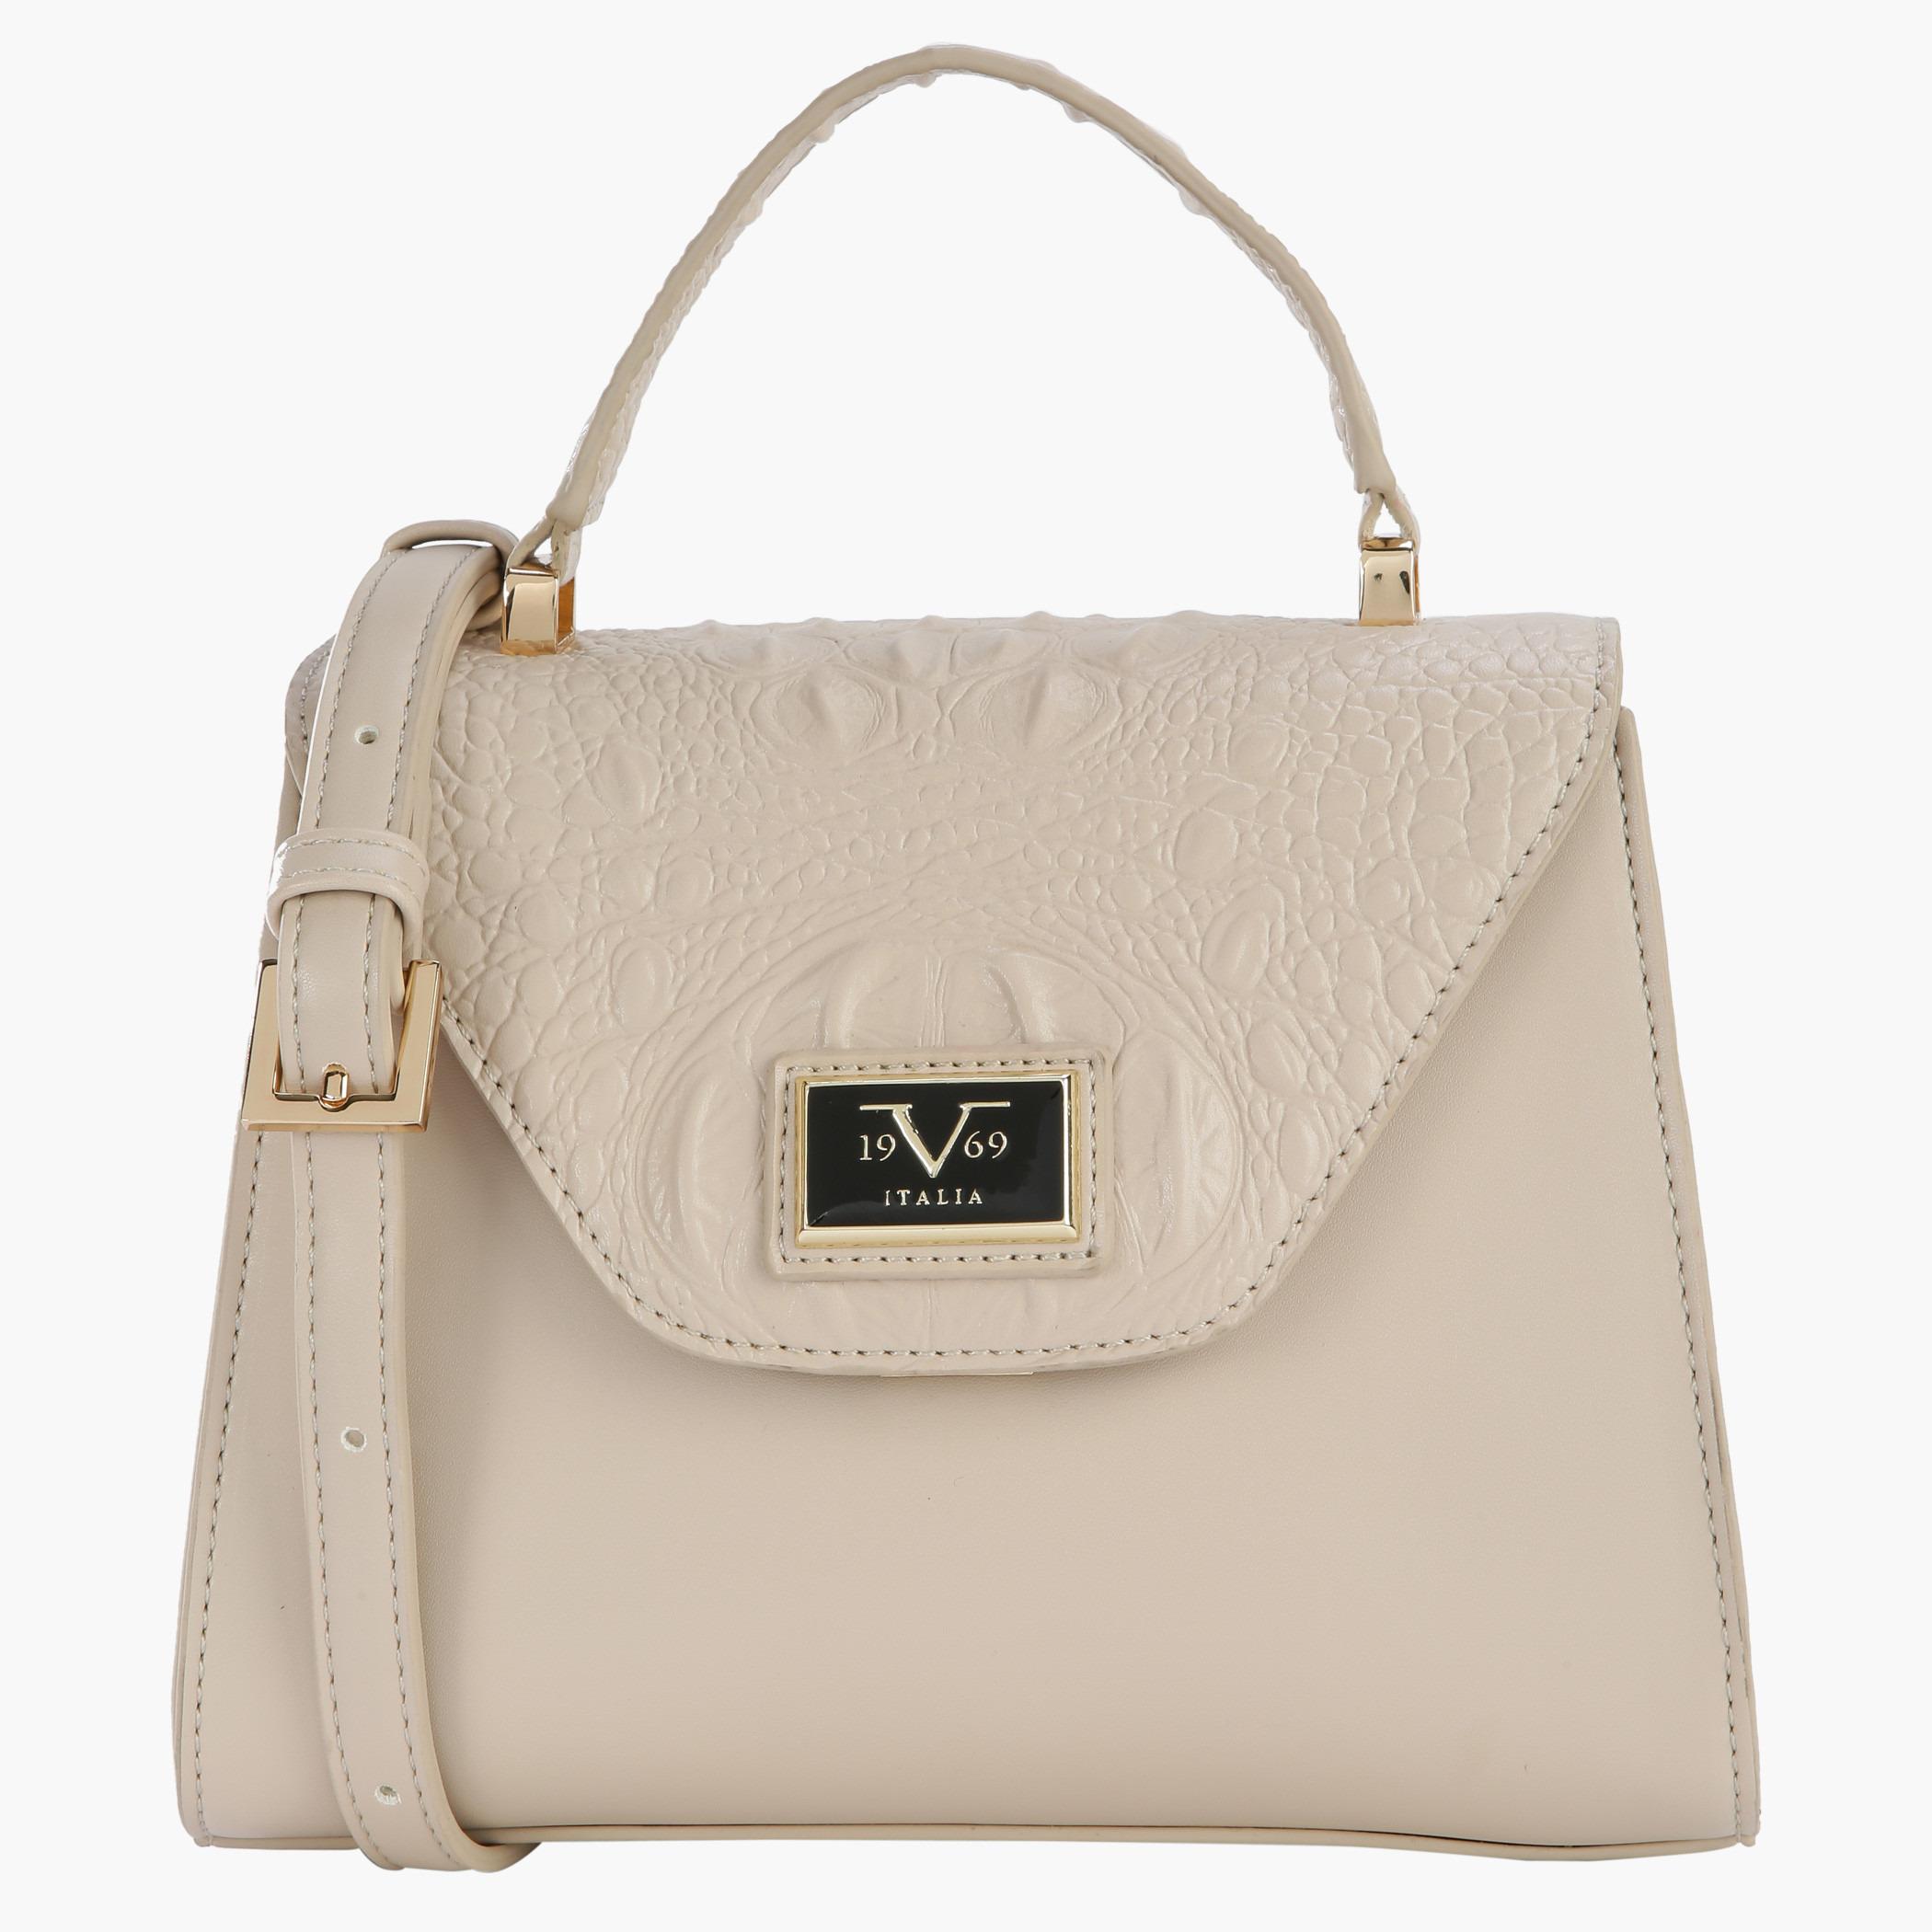 Versace 19v69 italia handbags - Germany, New - The wholesale platform |  Merkandi B2B